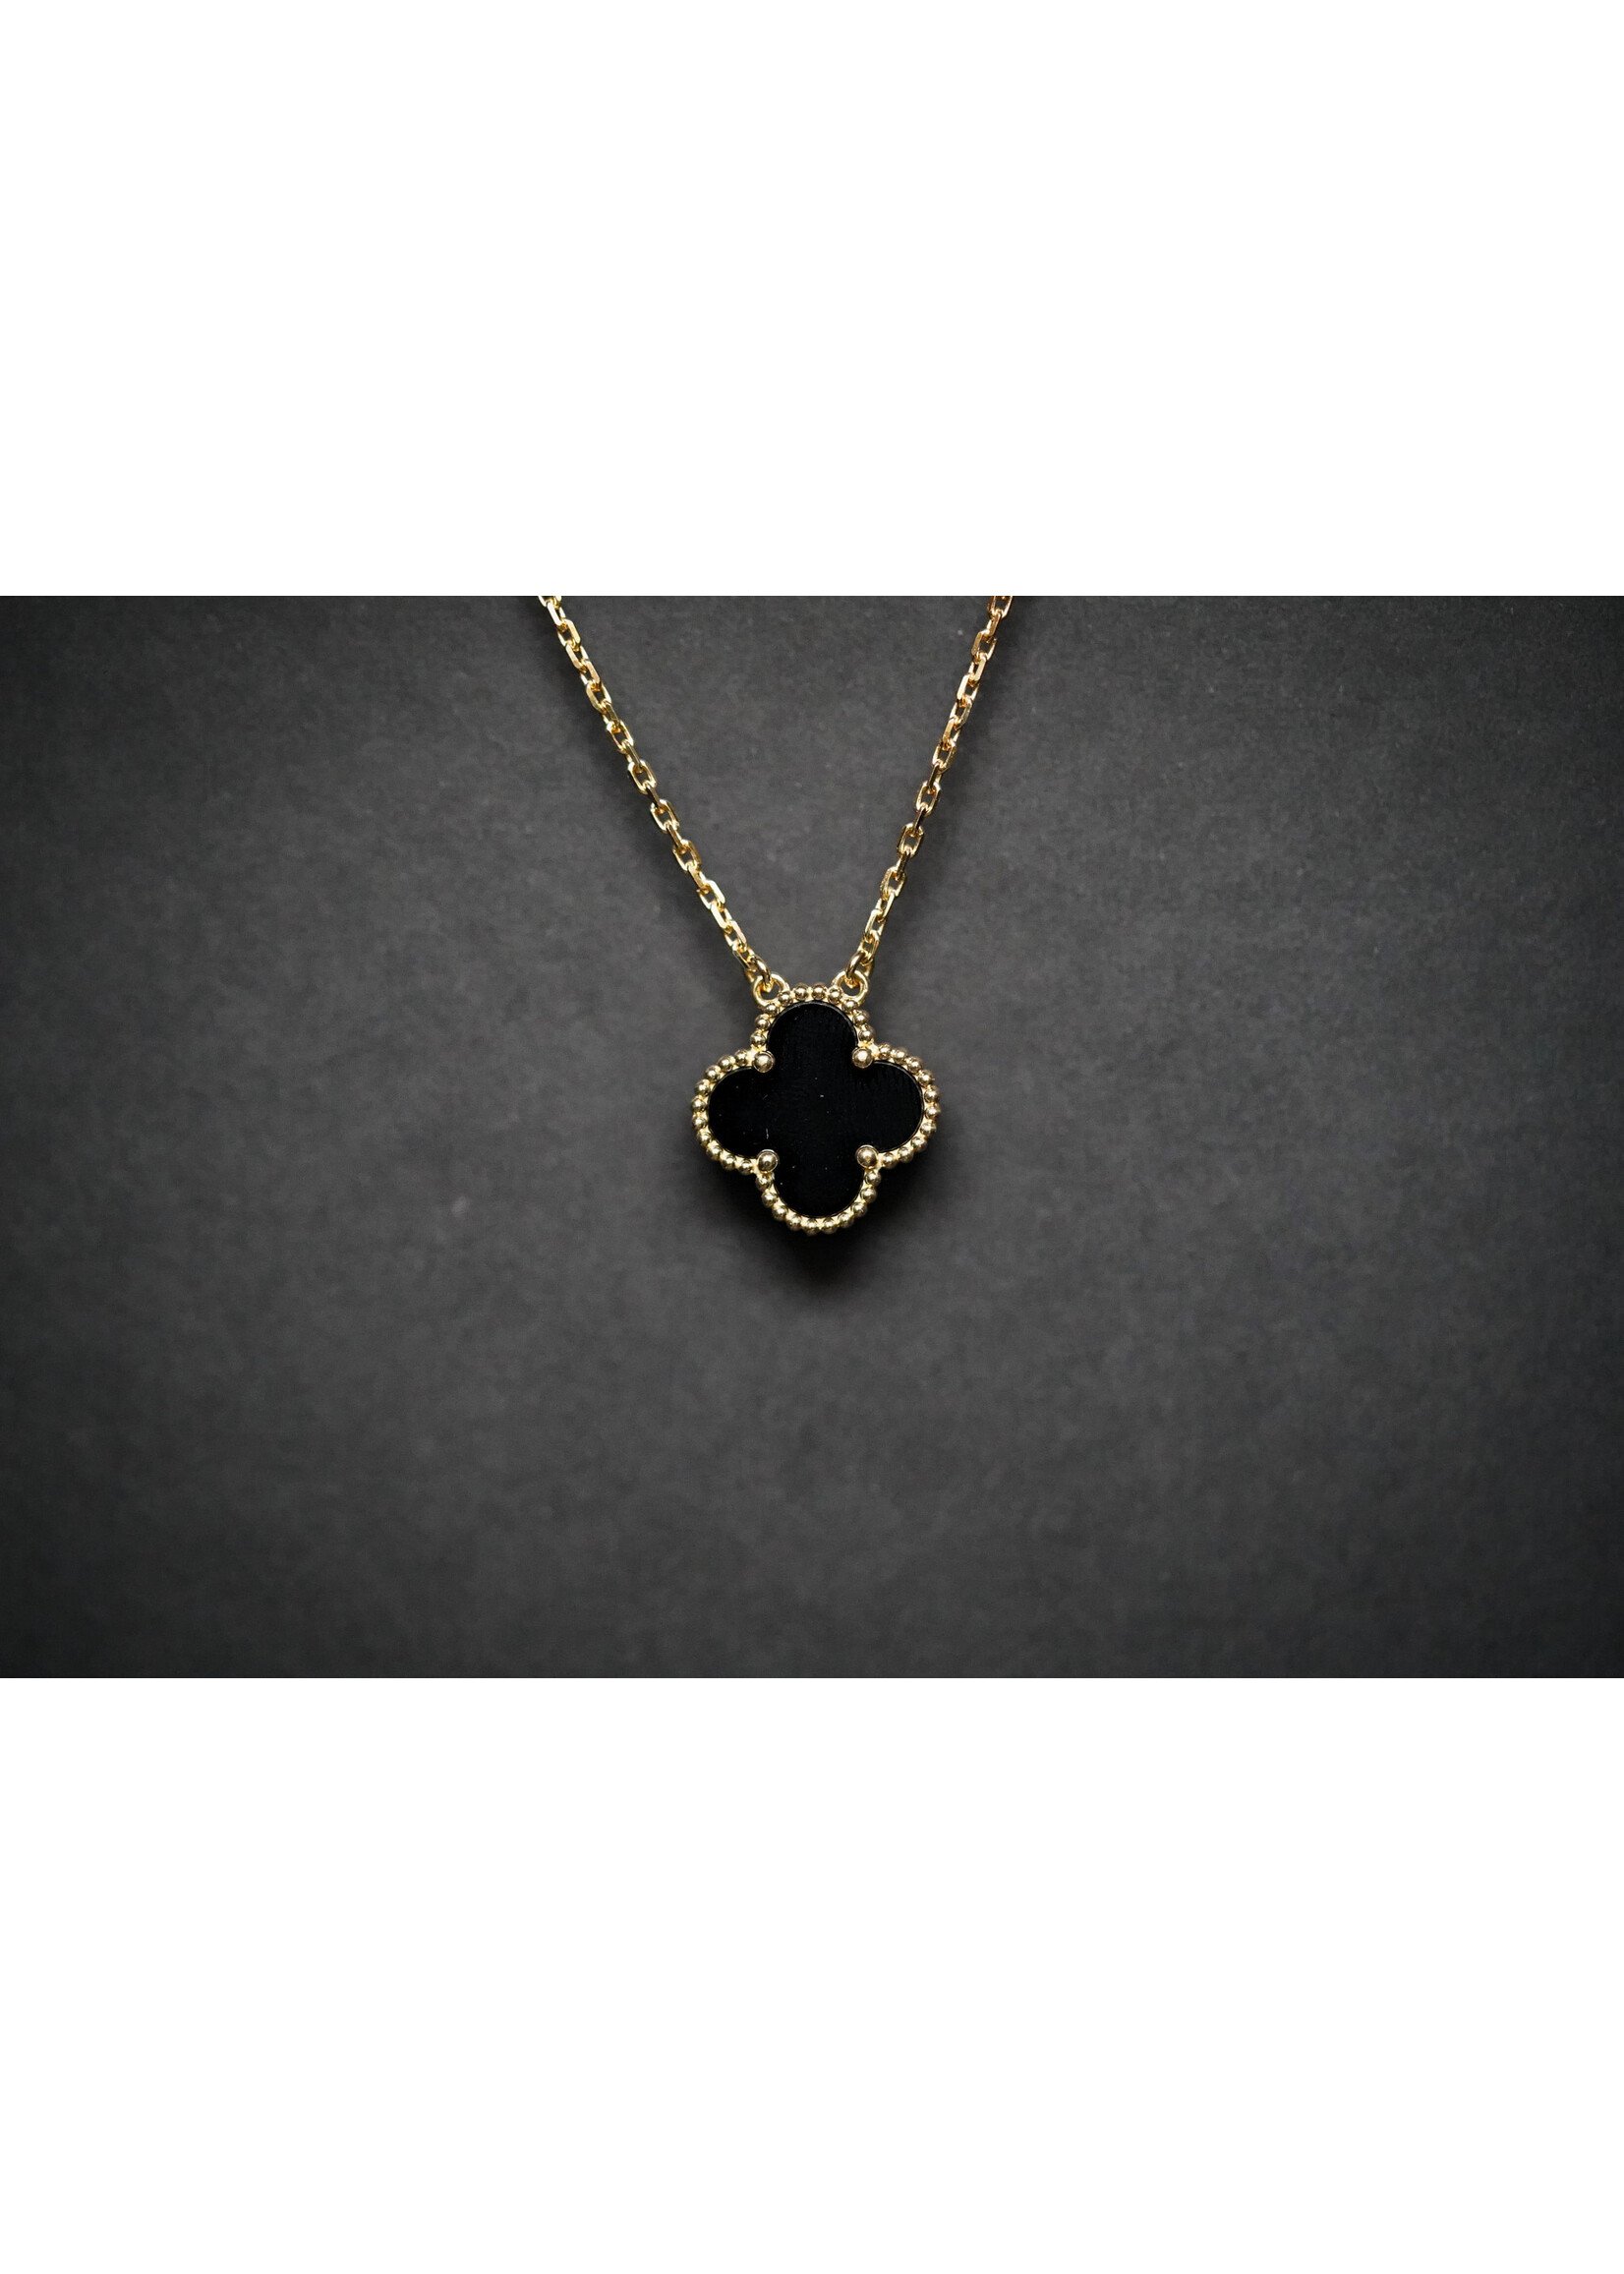 18KY 5.30g Black Onyx Van Cleef & Arpels Inspired Necklace 16-18"